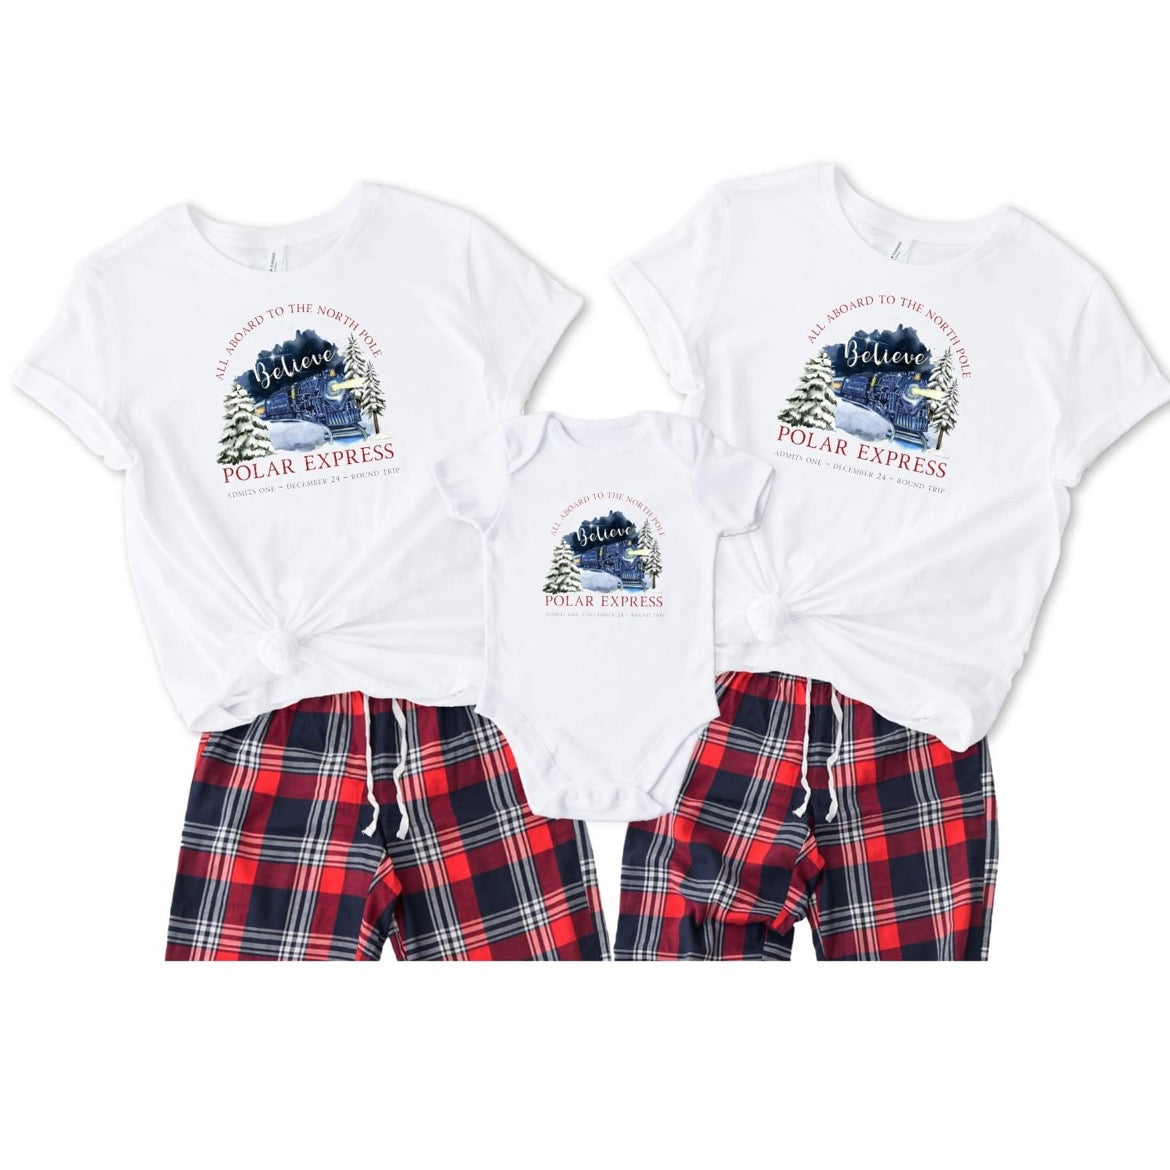 Polar Express Family T-shirts